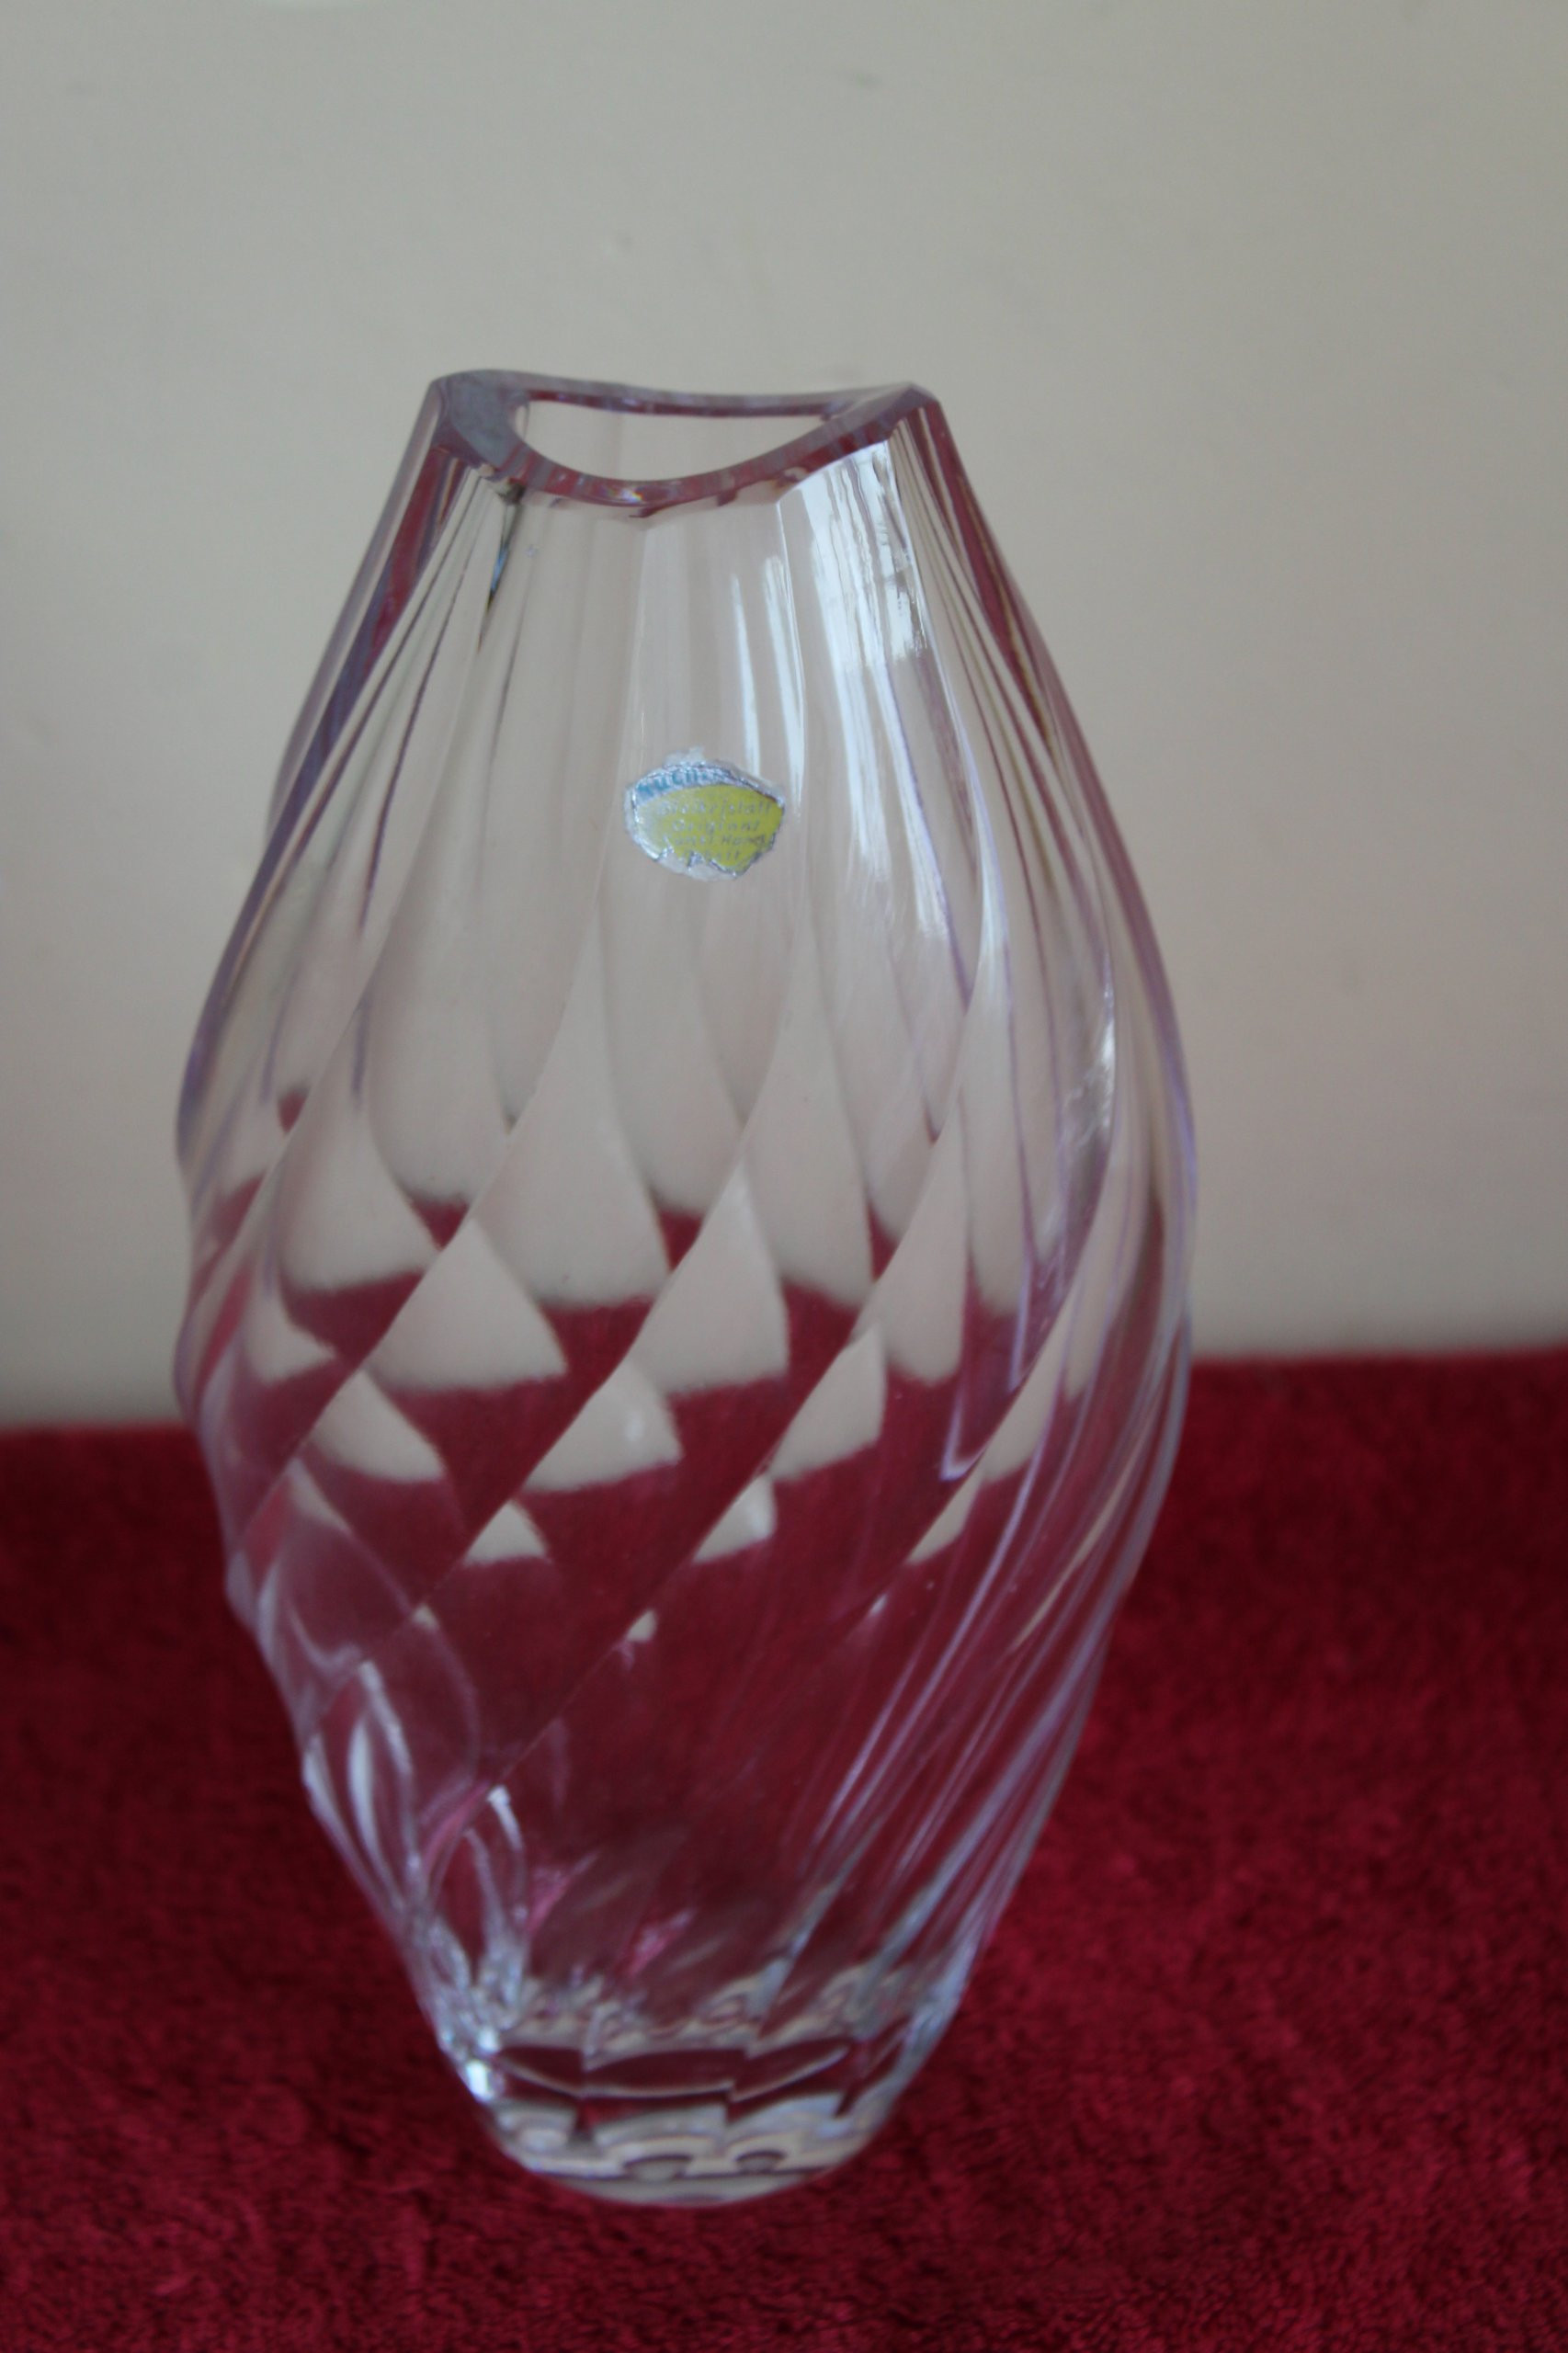 12 Wonderful Caithness Glass Vase 2024 free download caithness glass vase of wazon krysztaac281owy nachtman kunst 7282114566 oficjalne archiwum pertaining to wazon krysztaac281owy nachtman kunst